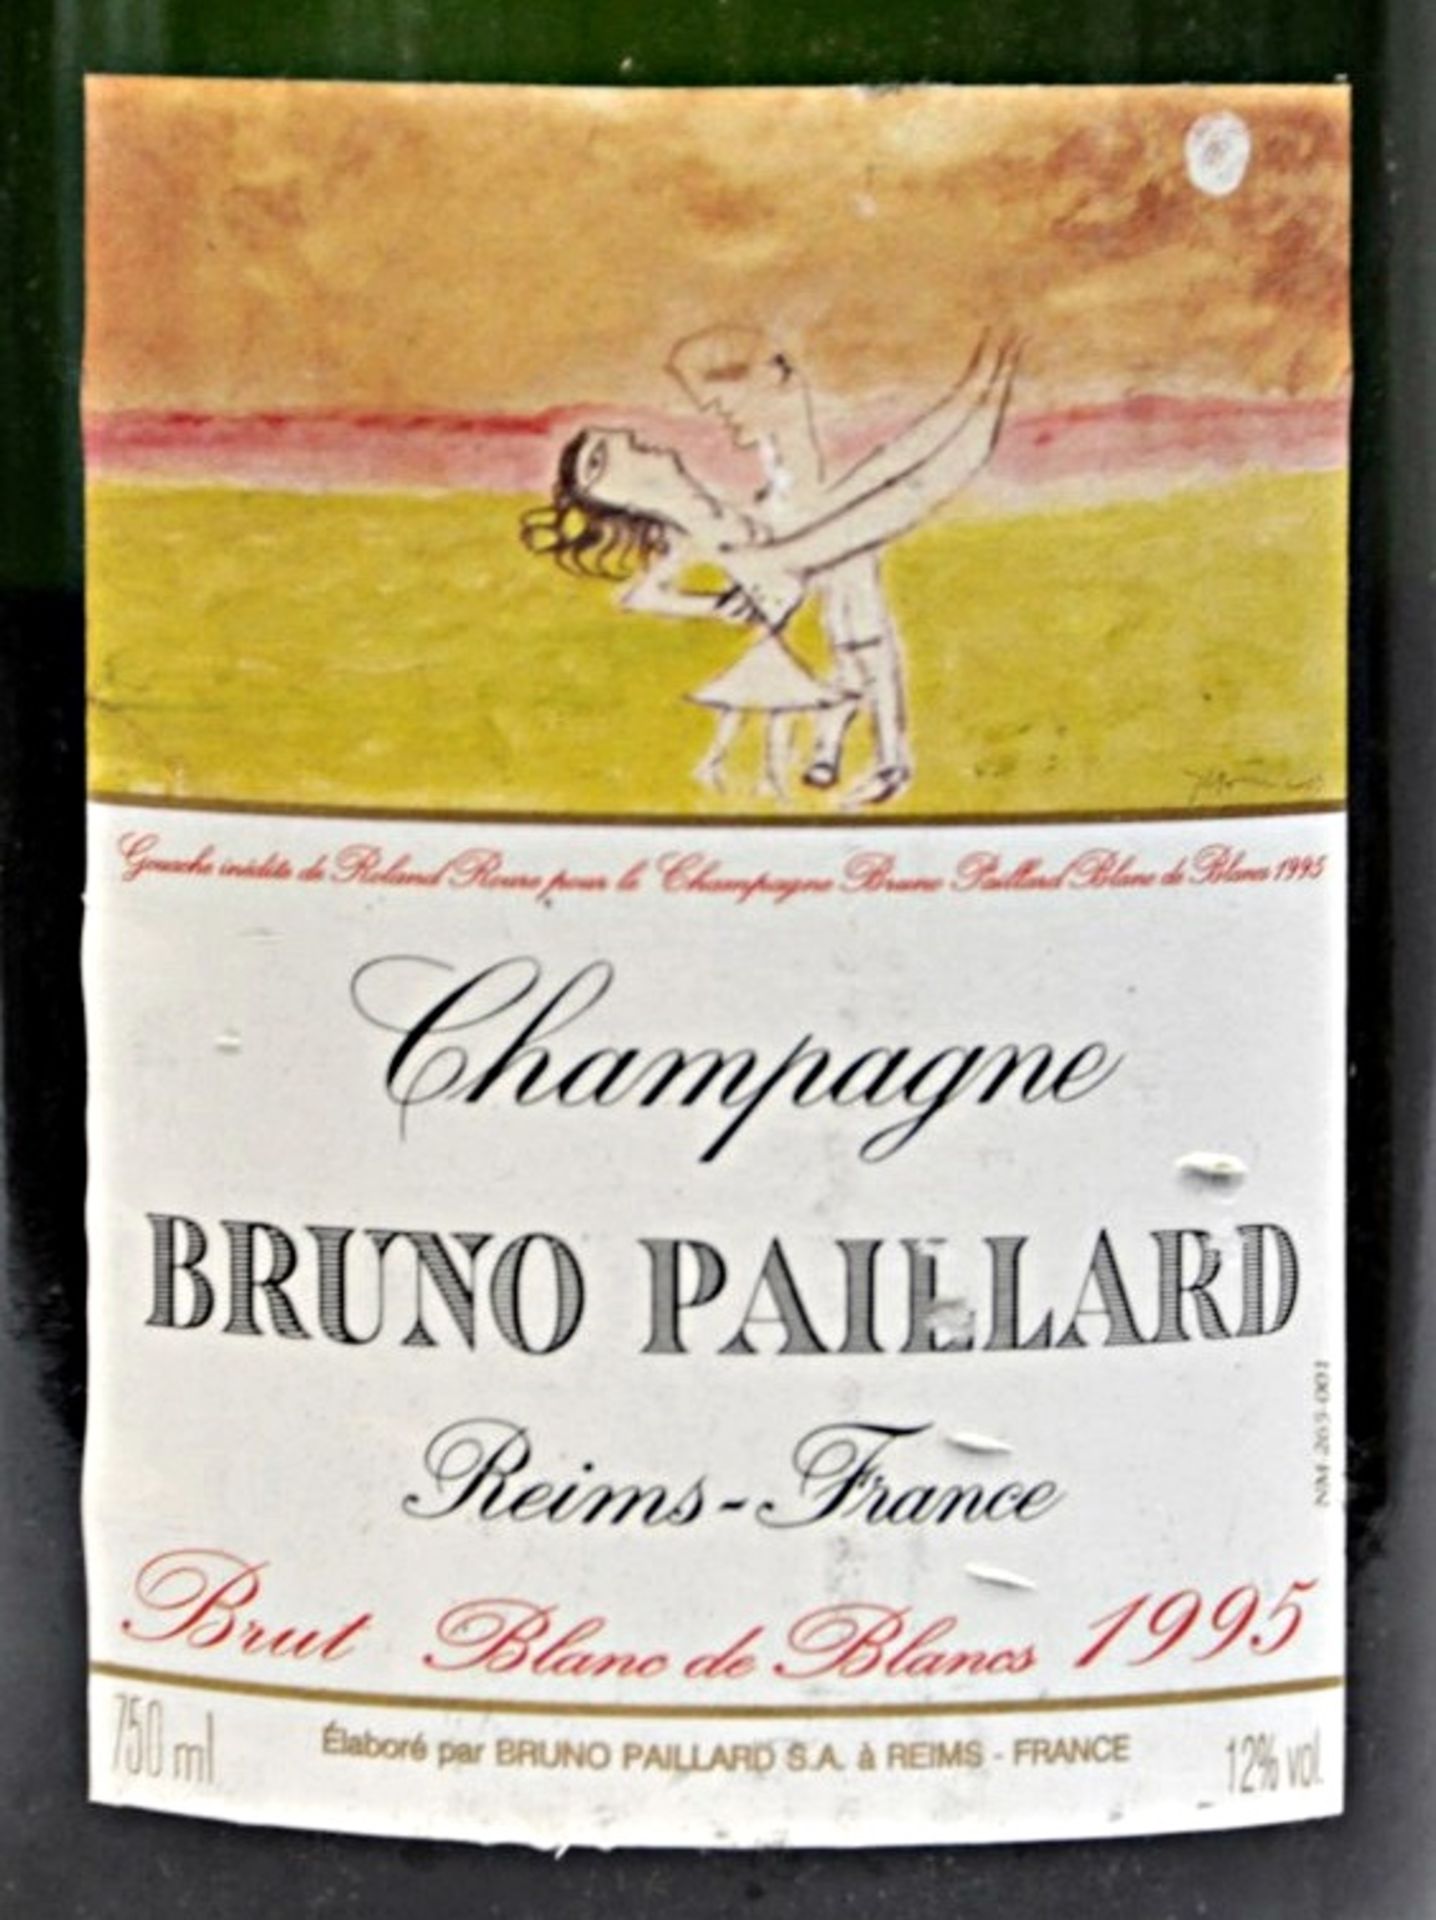 1 x Bruno Paillard Brut, Champagne, France – 2004 – Bottle Size 75cl – Volume 12% - Ref W1222 - - Image 4 of 4